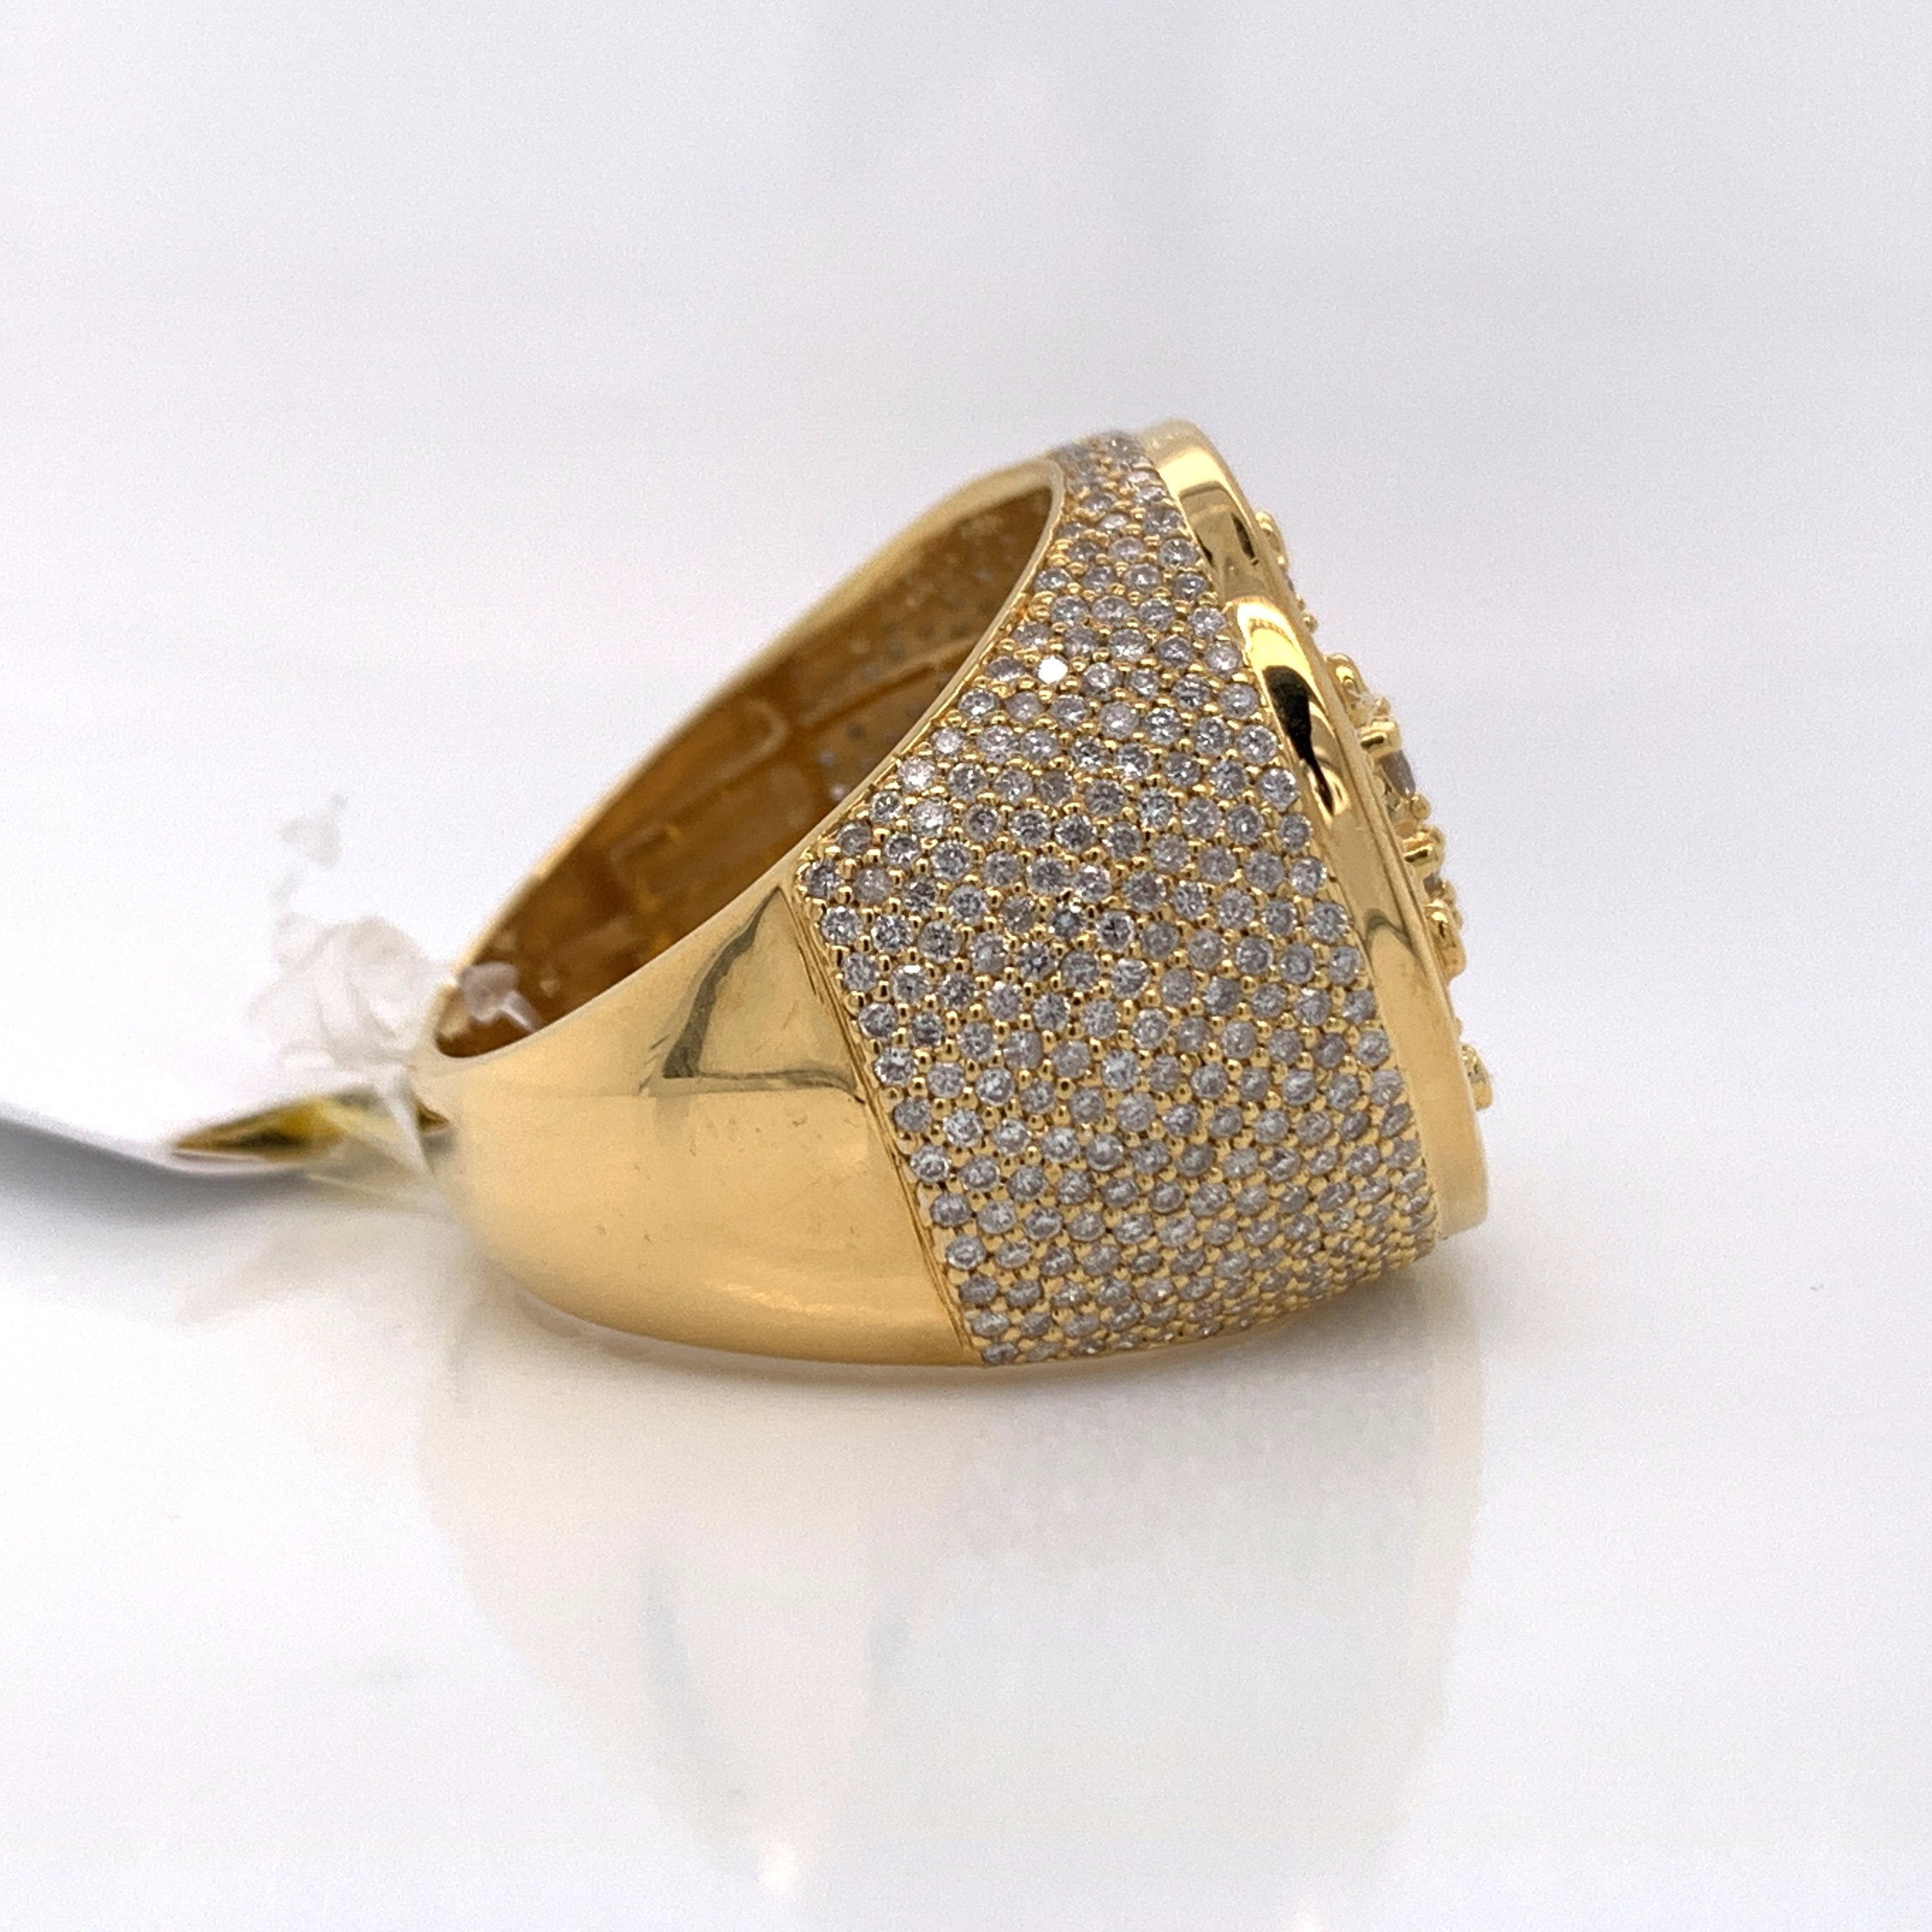 3.97 CT. Diamond Yellow Gold Ring 10K - White Carat - USA & Canada